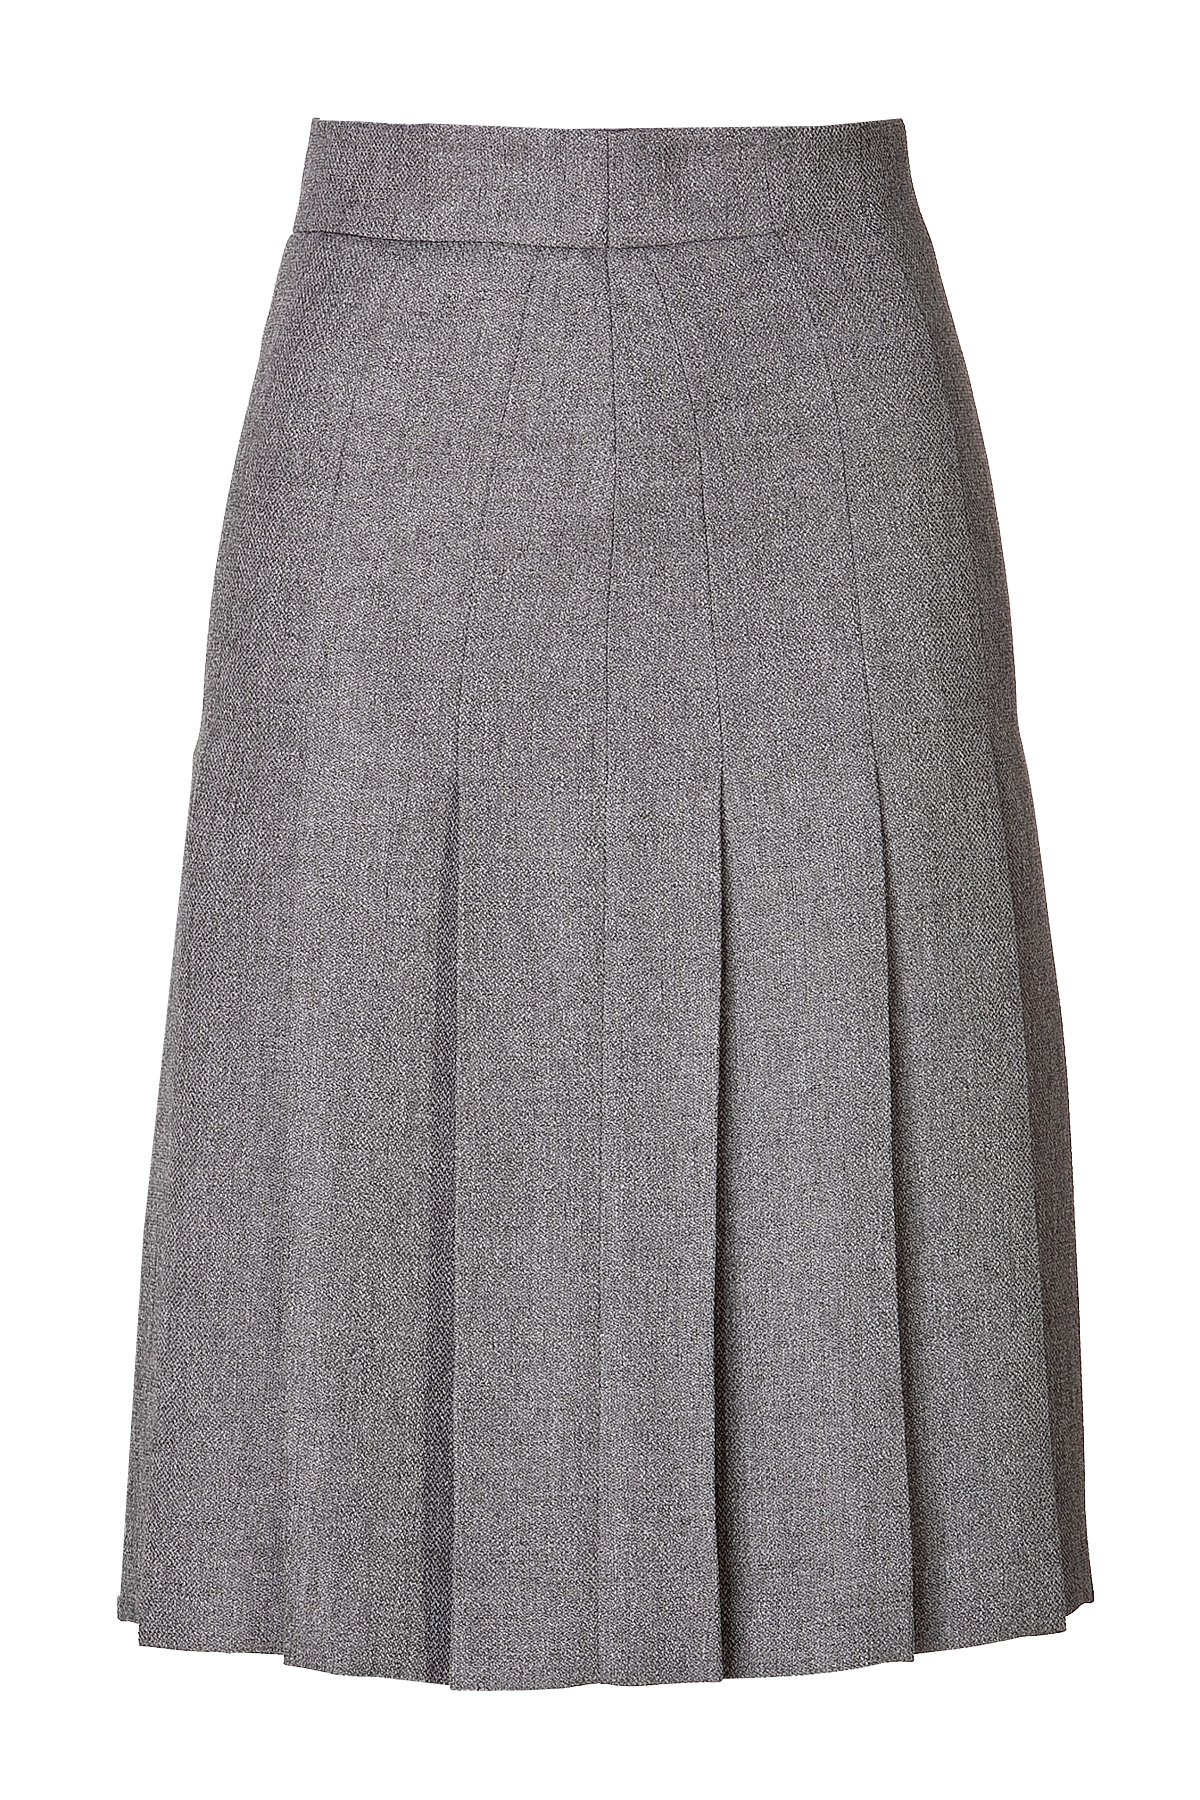 Plus Size Gray Wool Blend pleated skirt , Custom Fit, Fully Lined,  Handmade, Wool Blend Fabric – Elizabeth's Custom Skirts